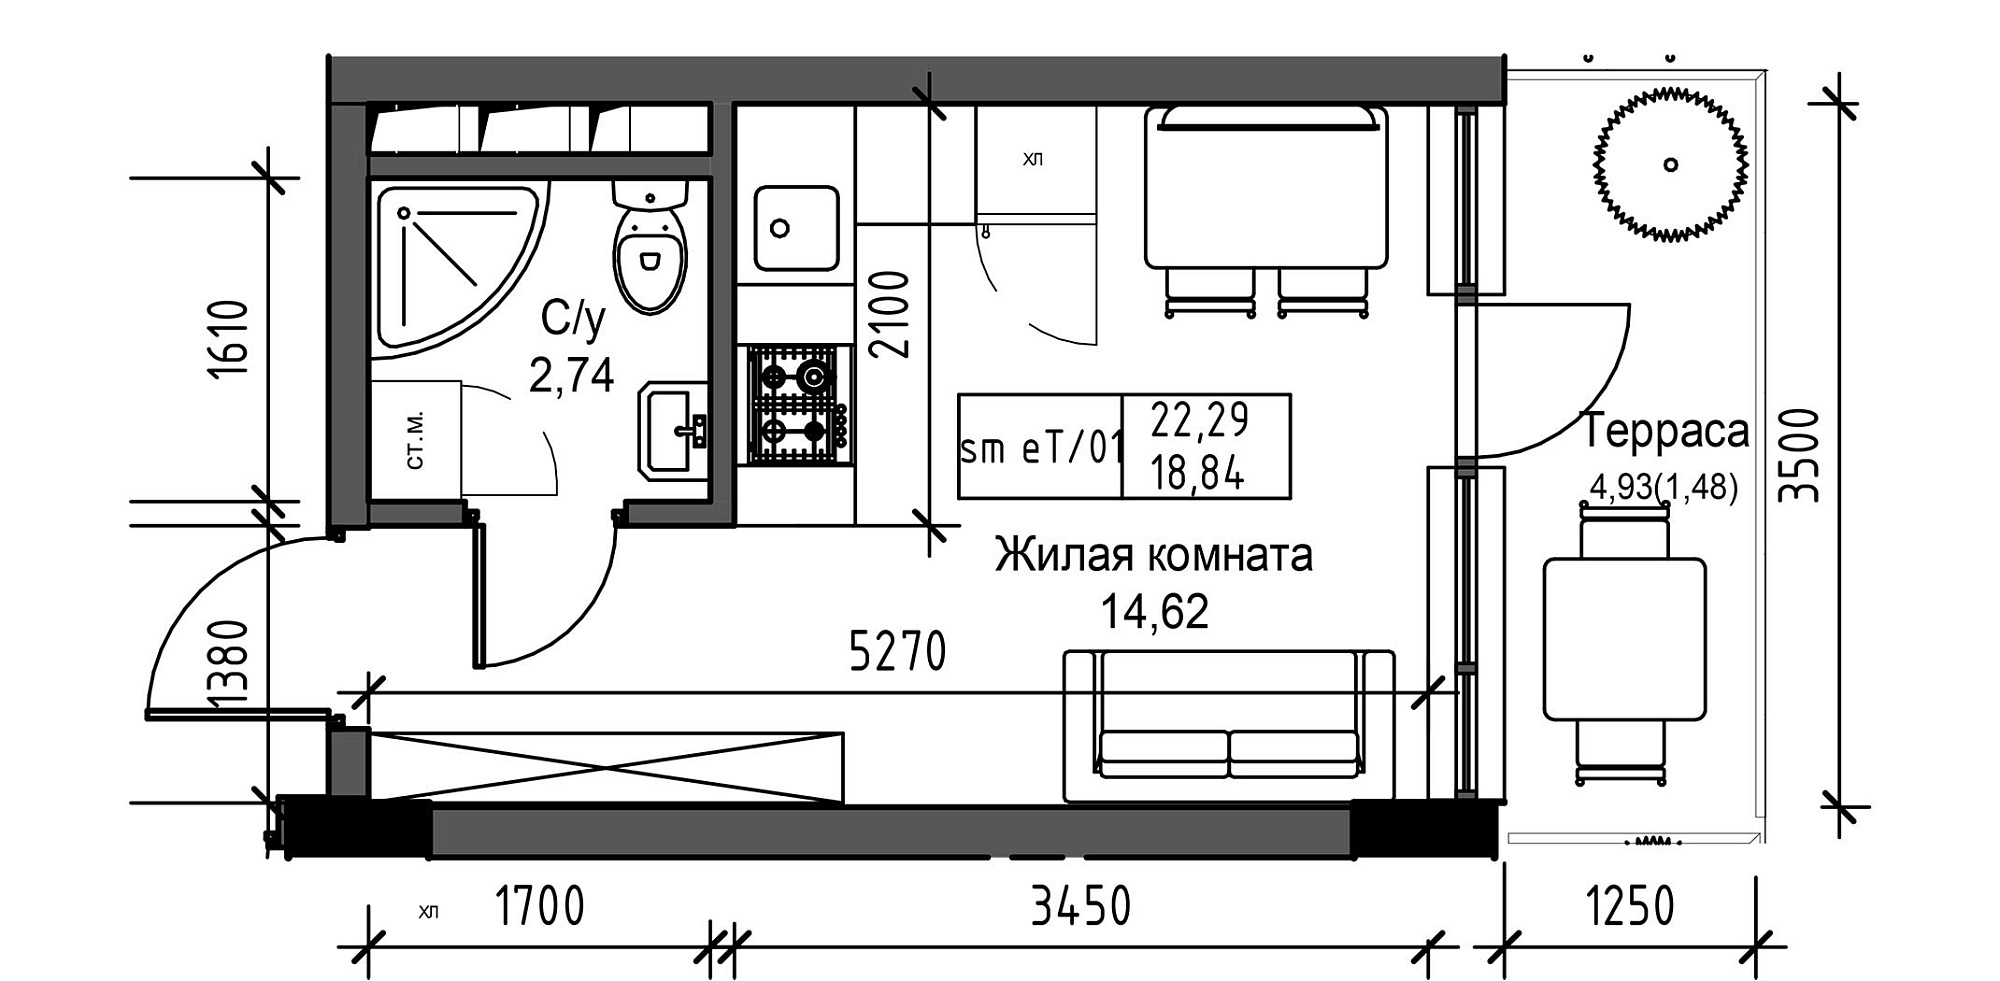 Планування Smart-квартира площею 18.84м2, UM-003-09/0095.